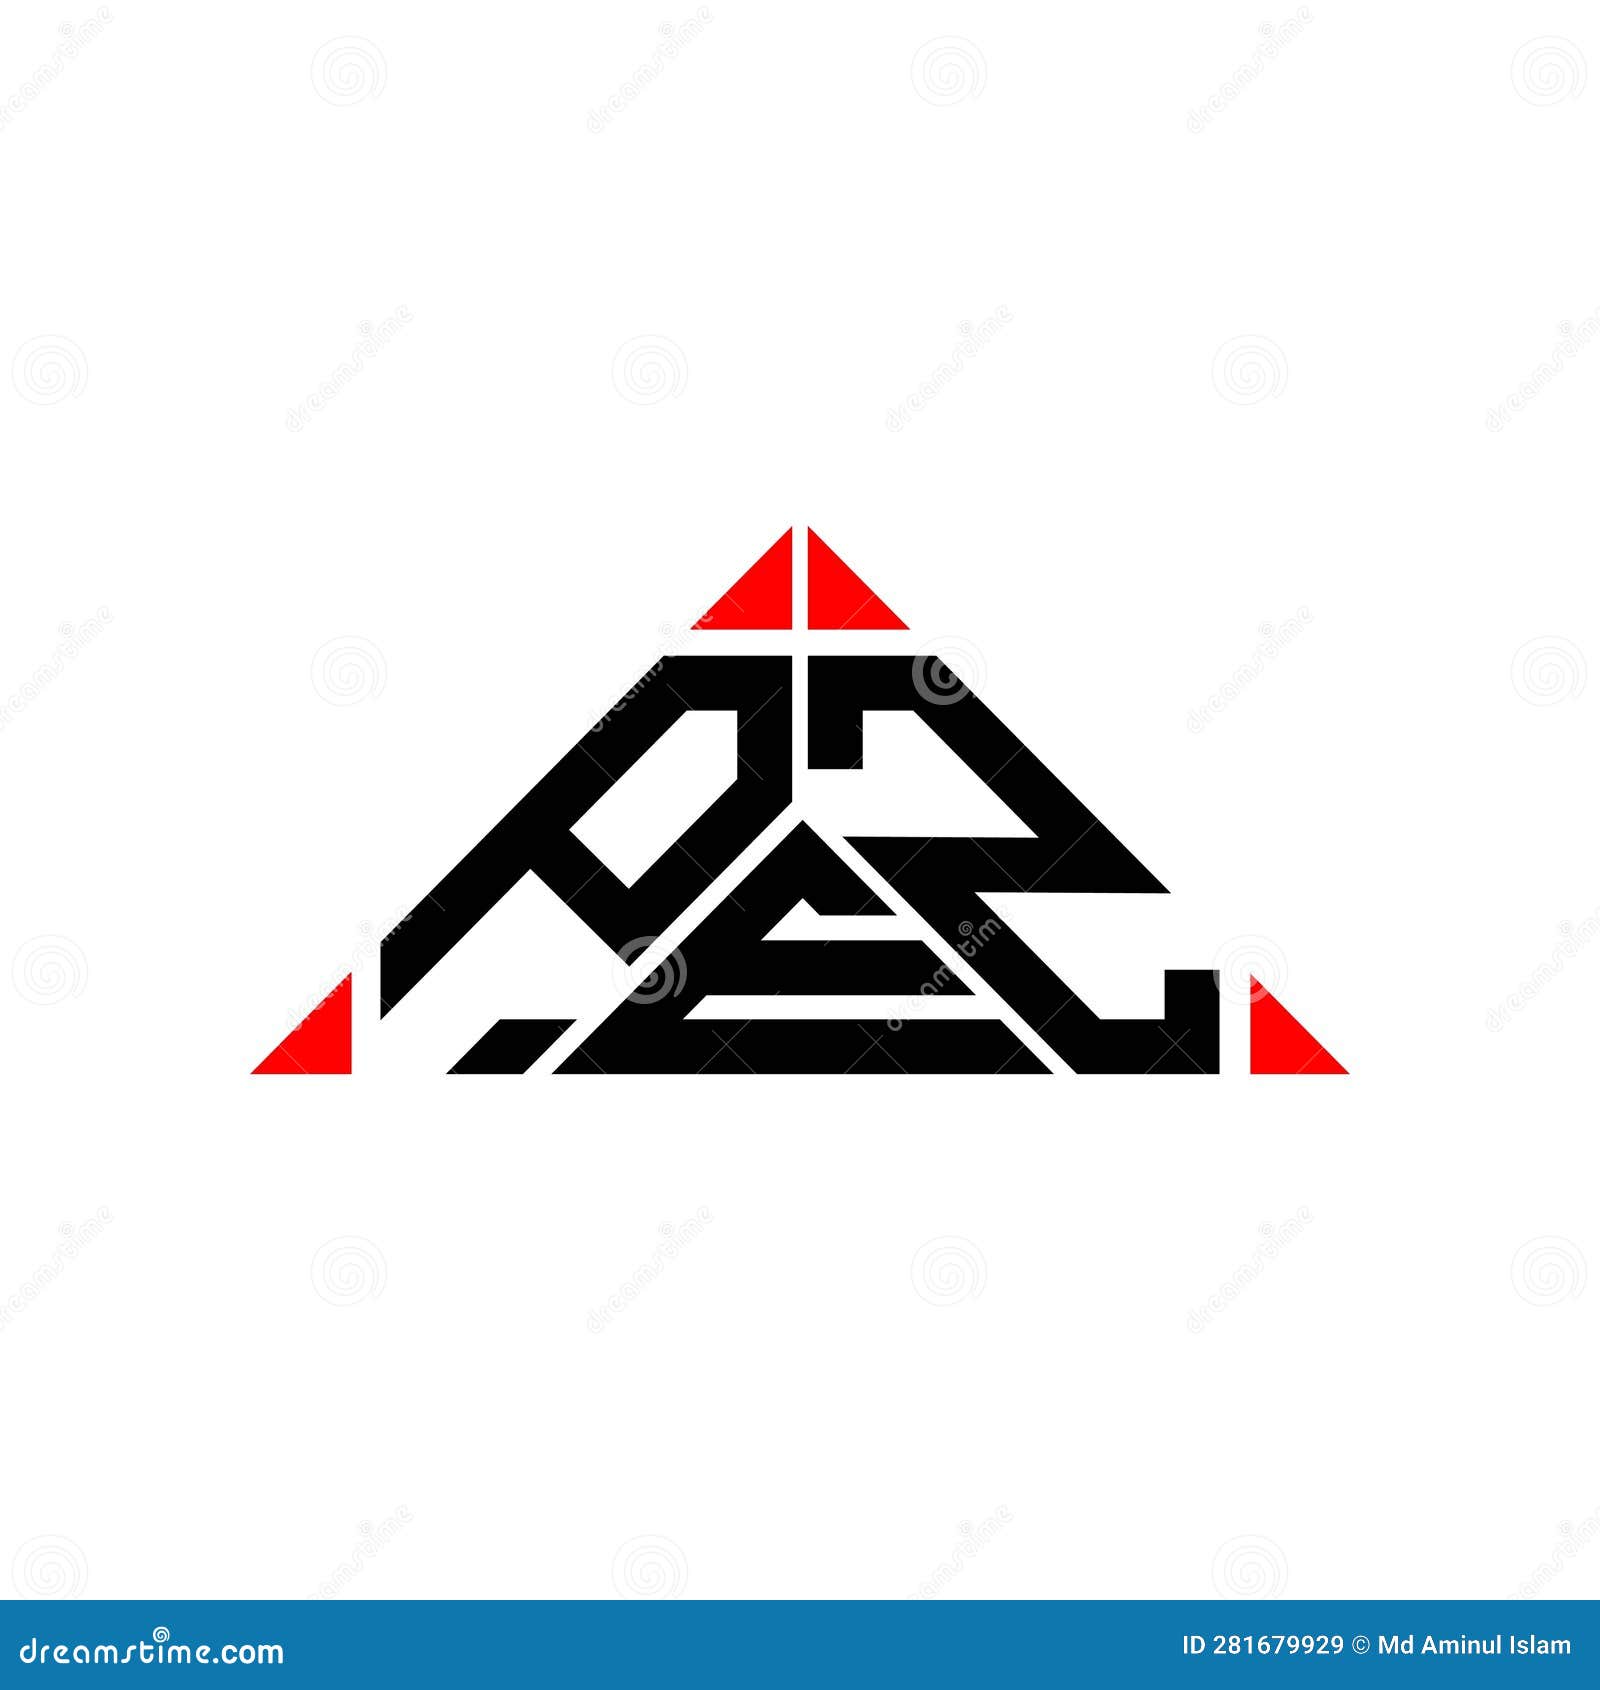 pez letter logo creative  with  graphic, pez